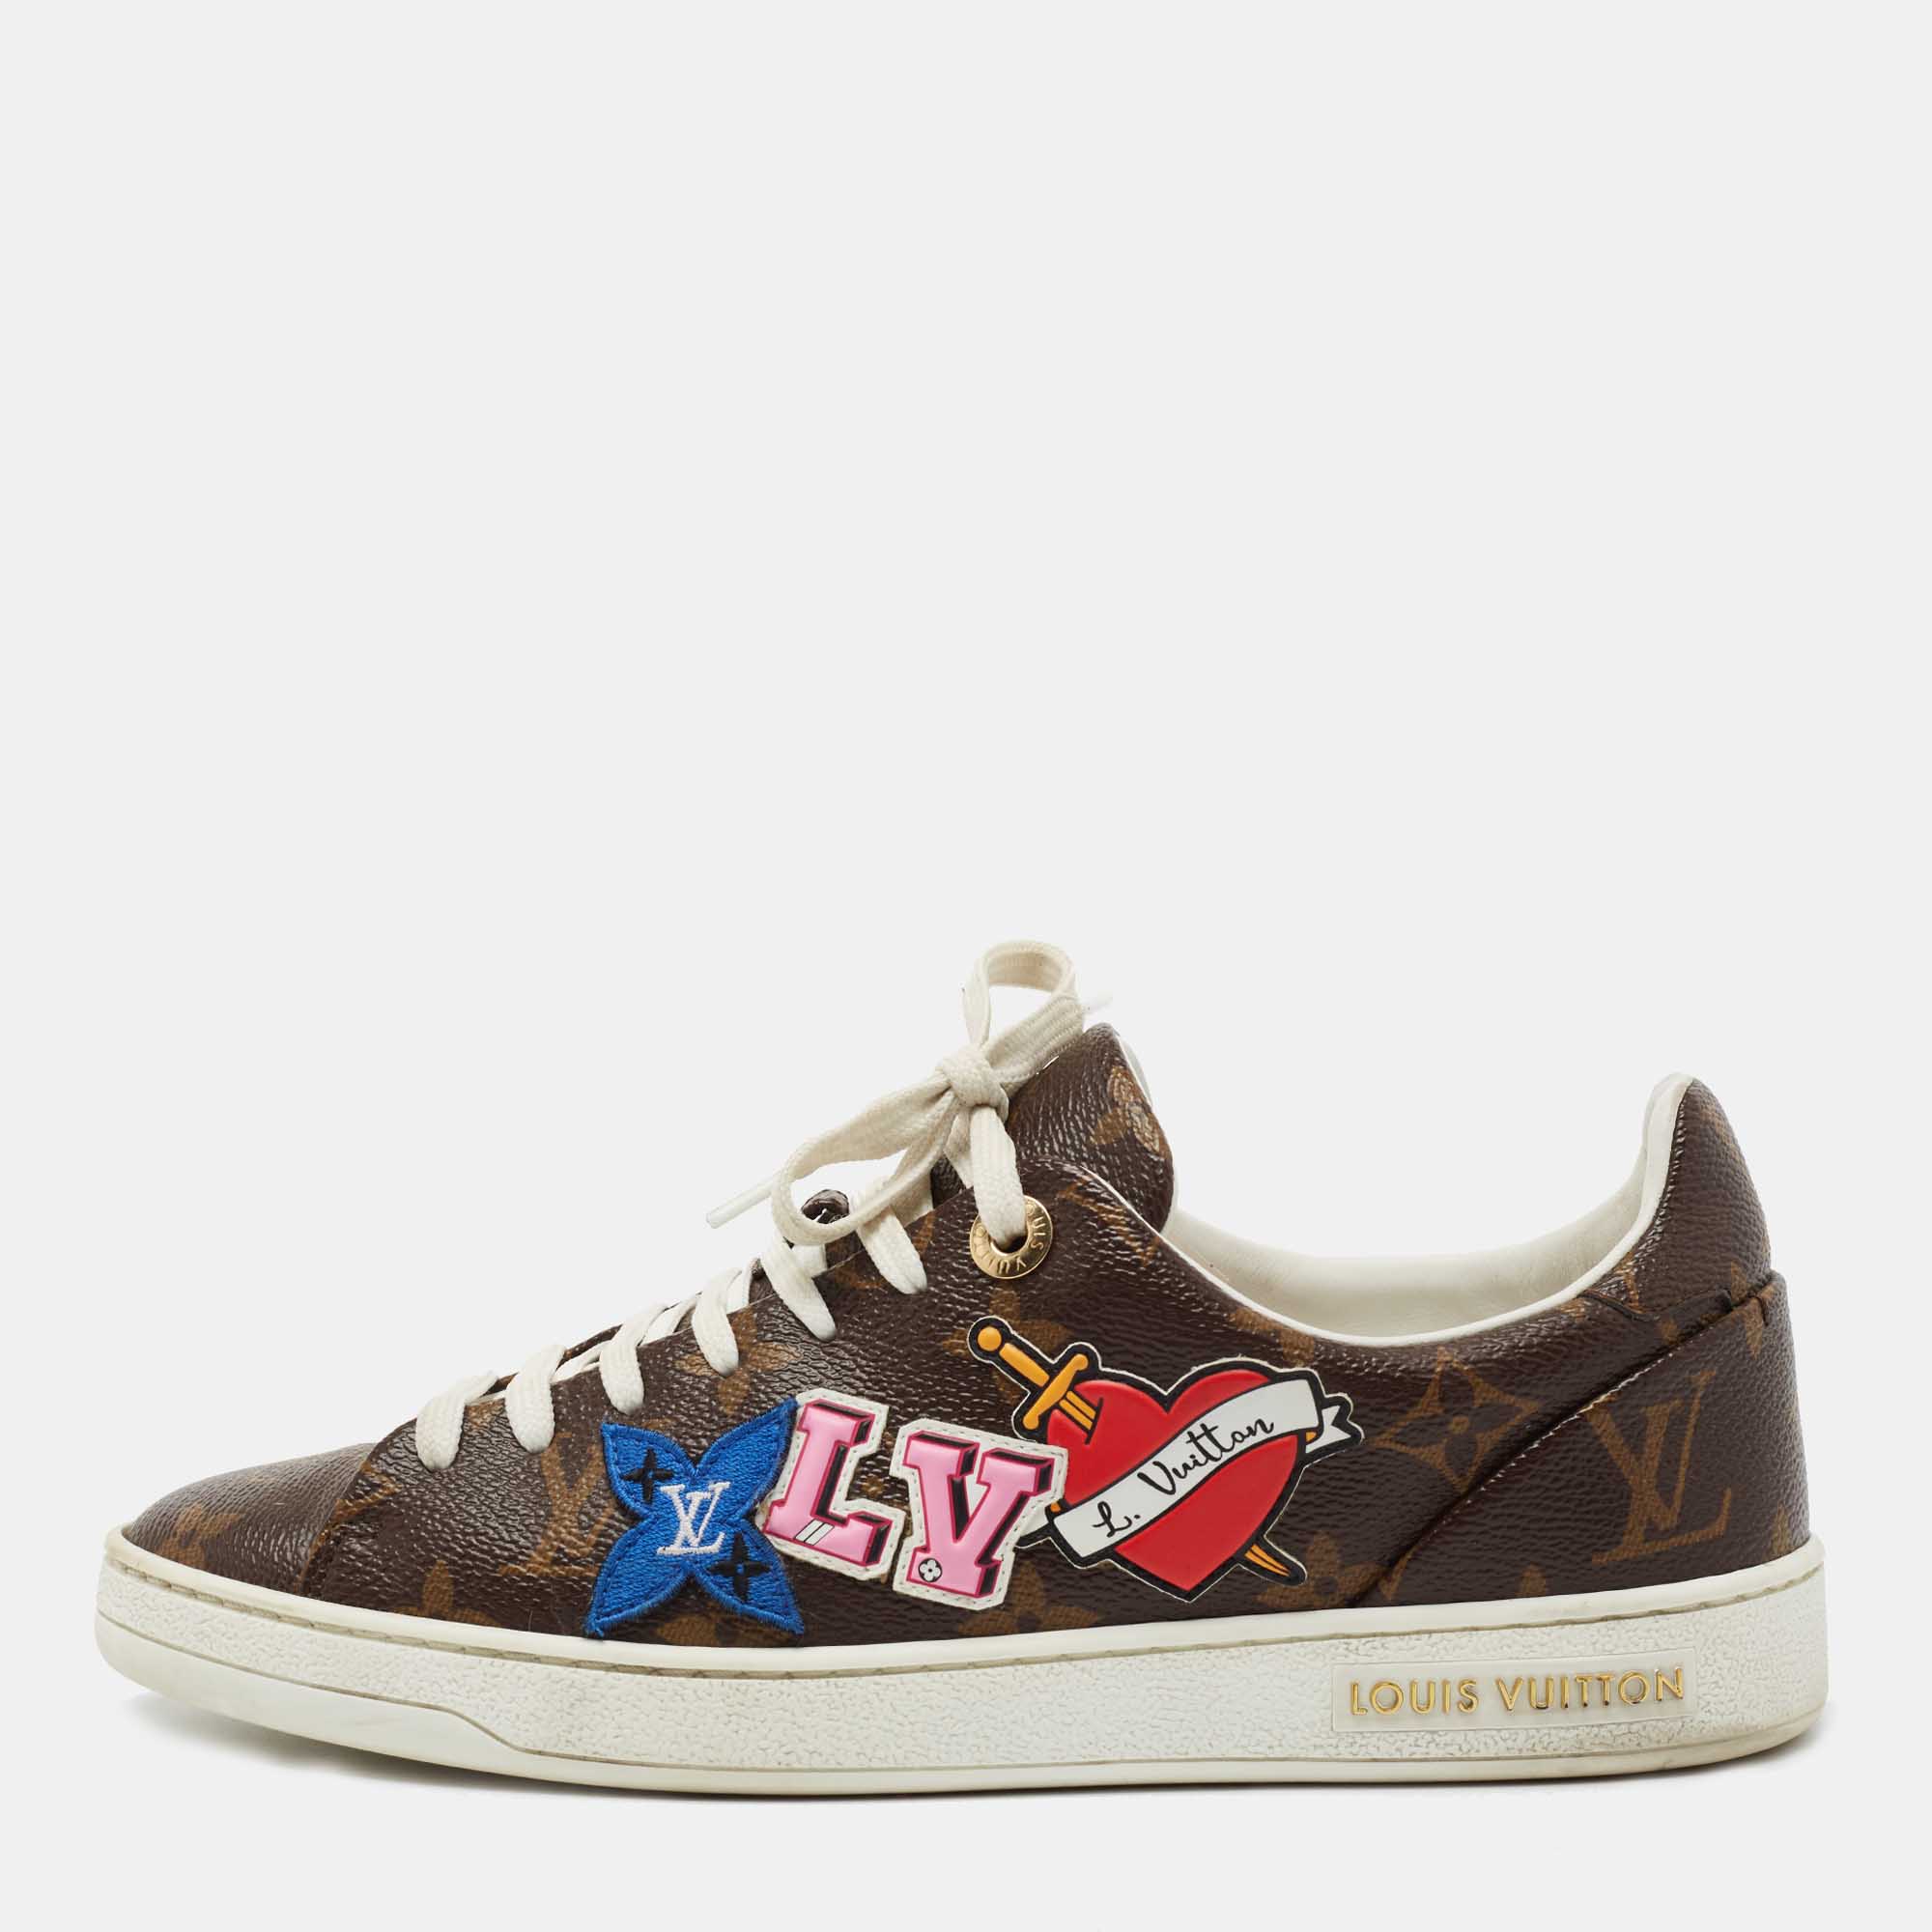 Louis Vuitton, Shoes, Lv Calfskin Frontrow Sneakers